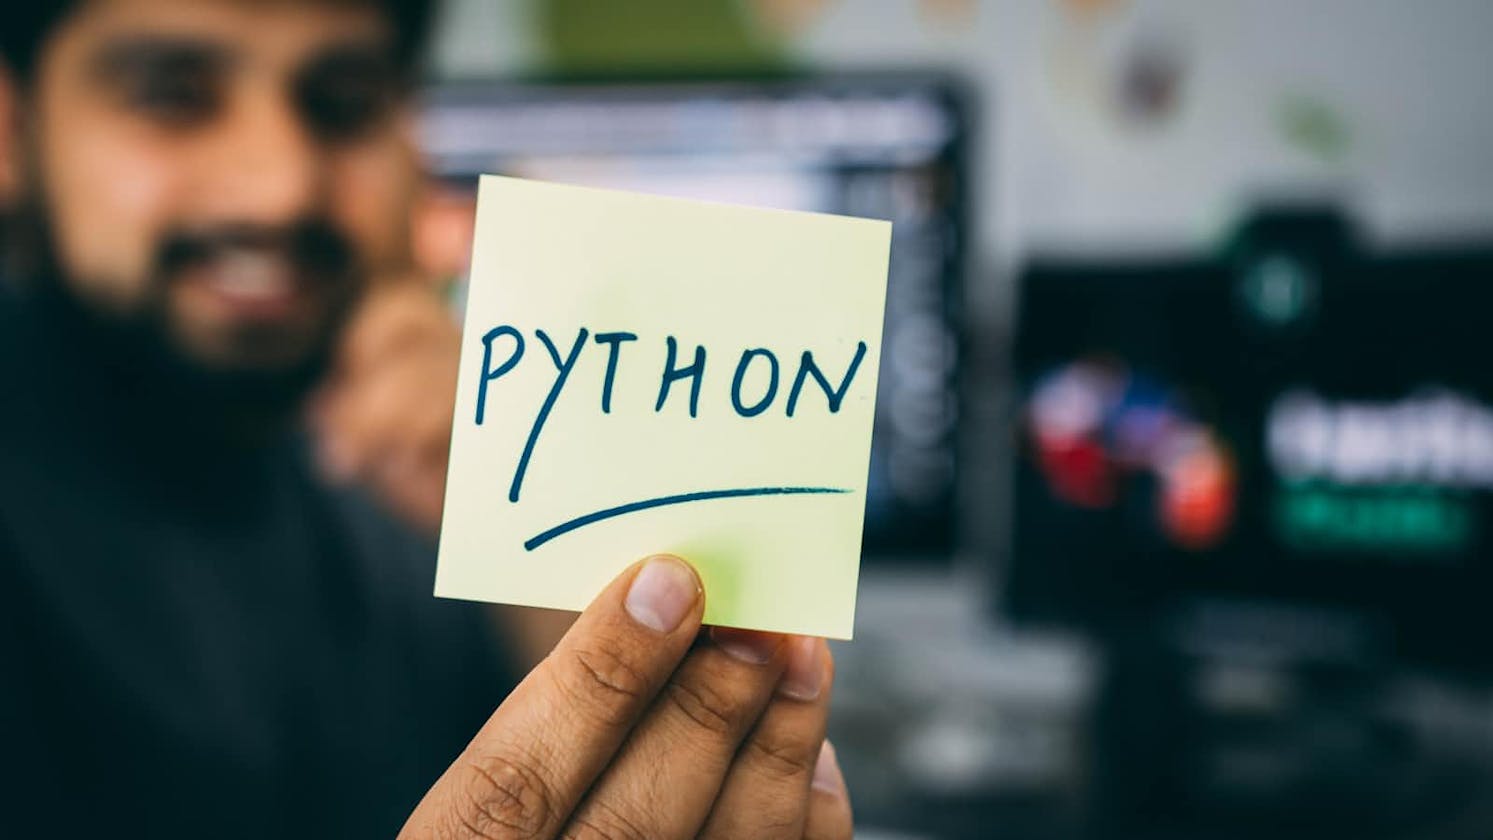 Basic of Python Programming